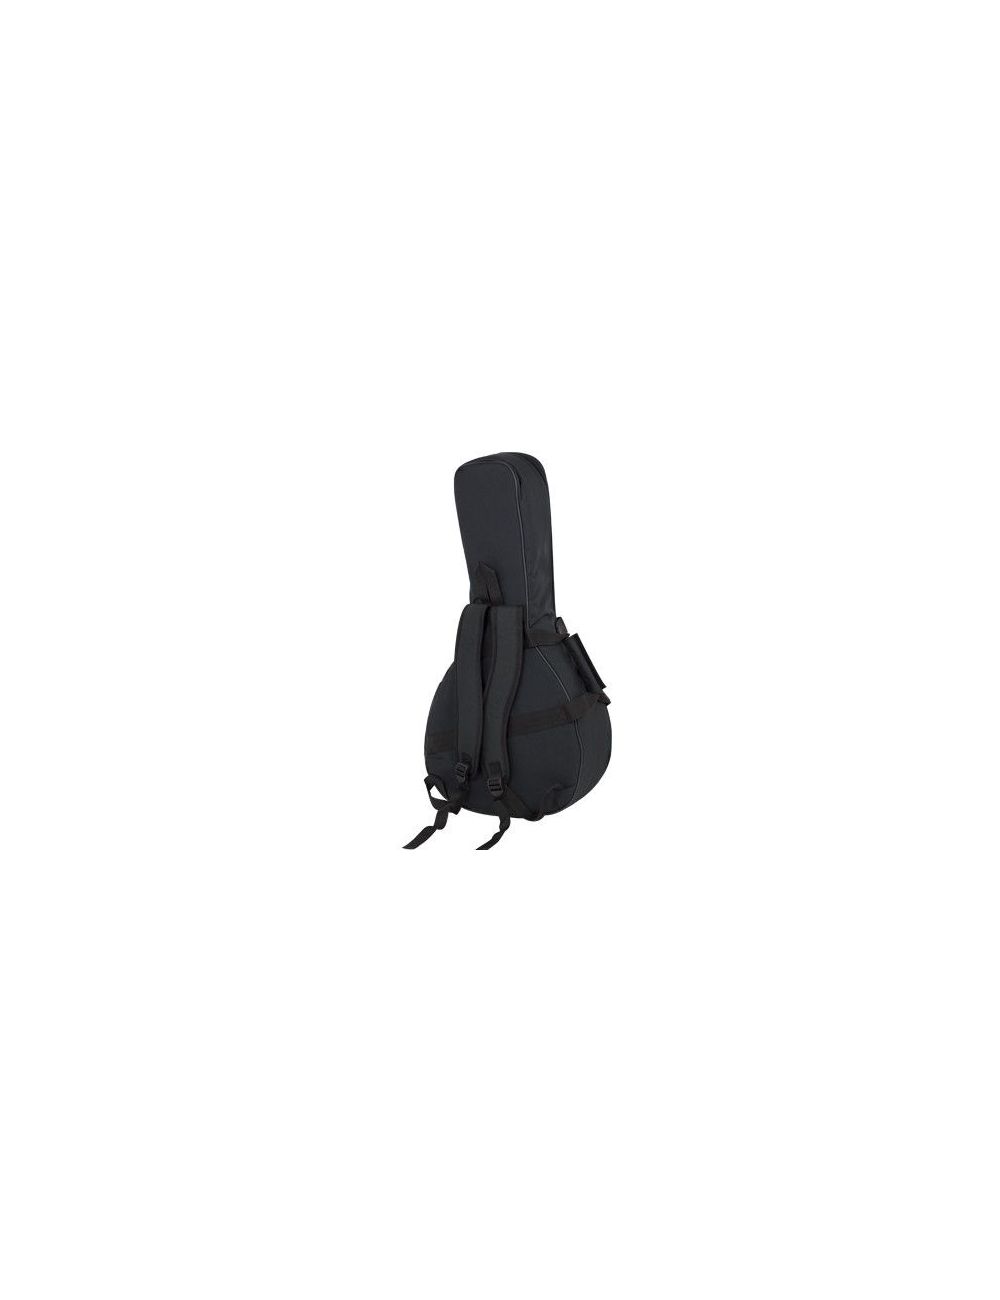 Ortola 70CH Bandurria guitar bag 6899-001 Cases and Bags